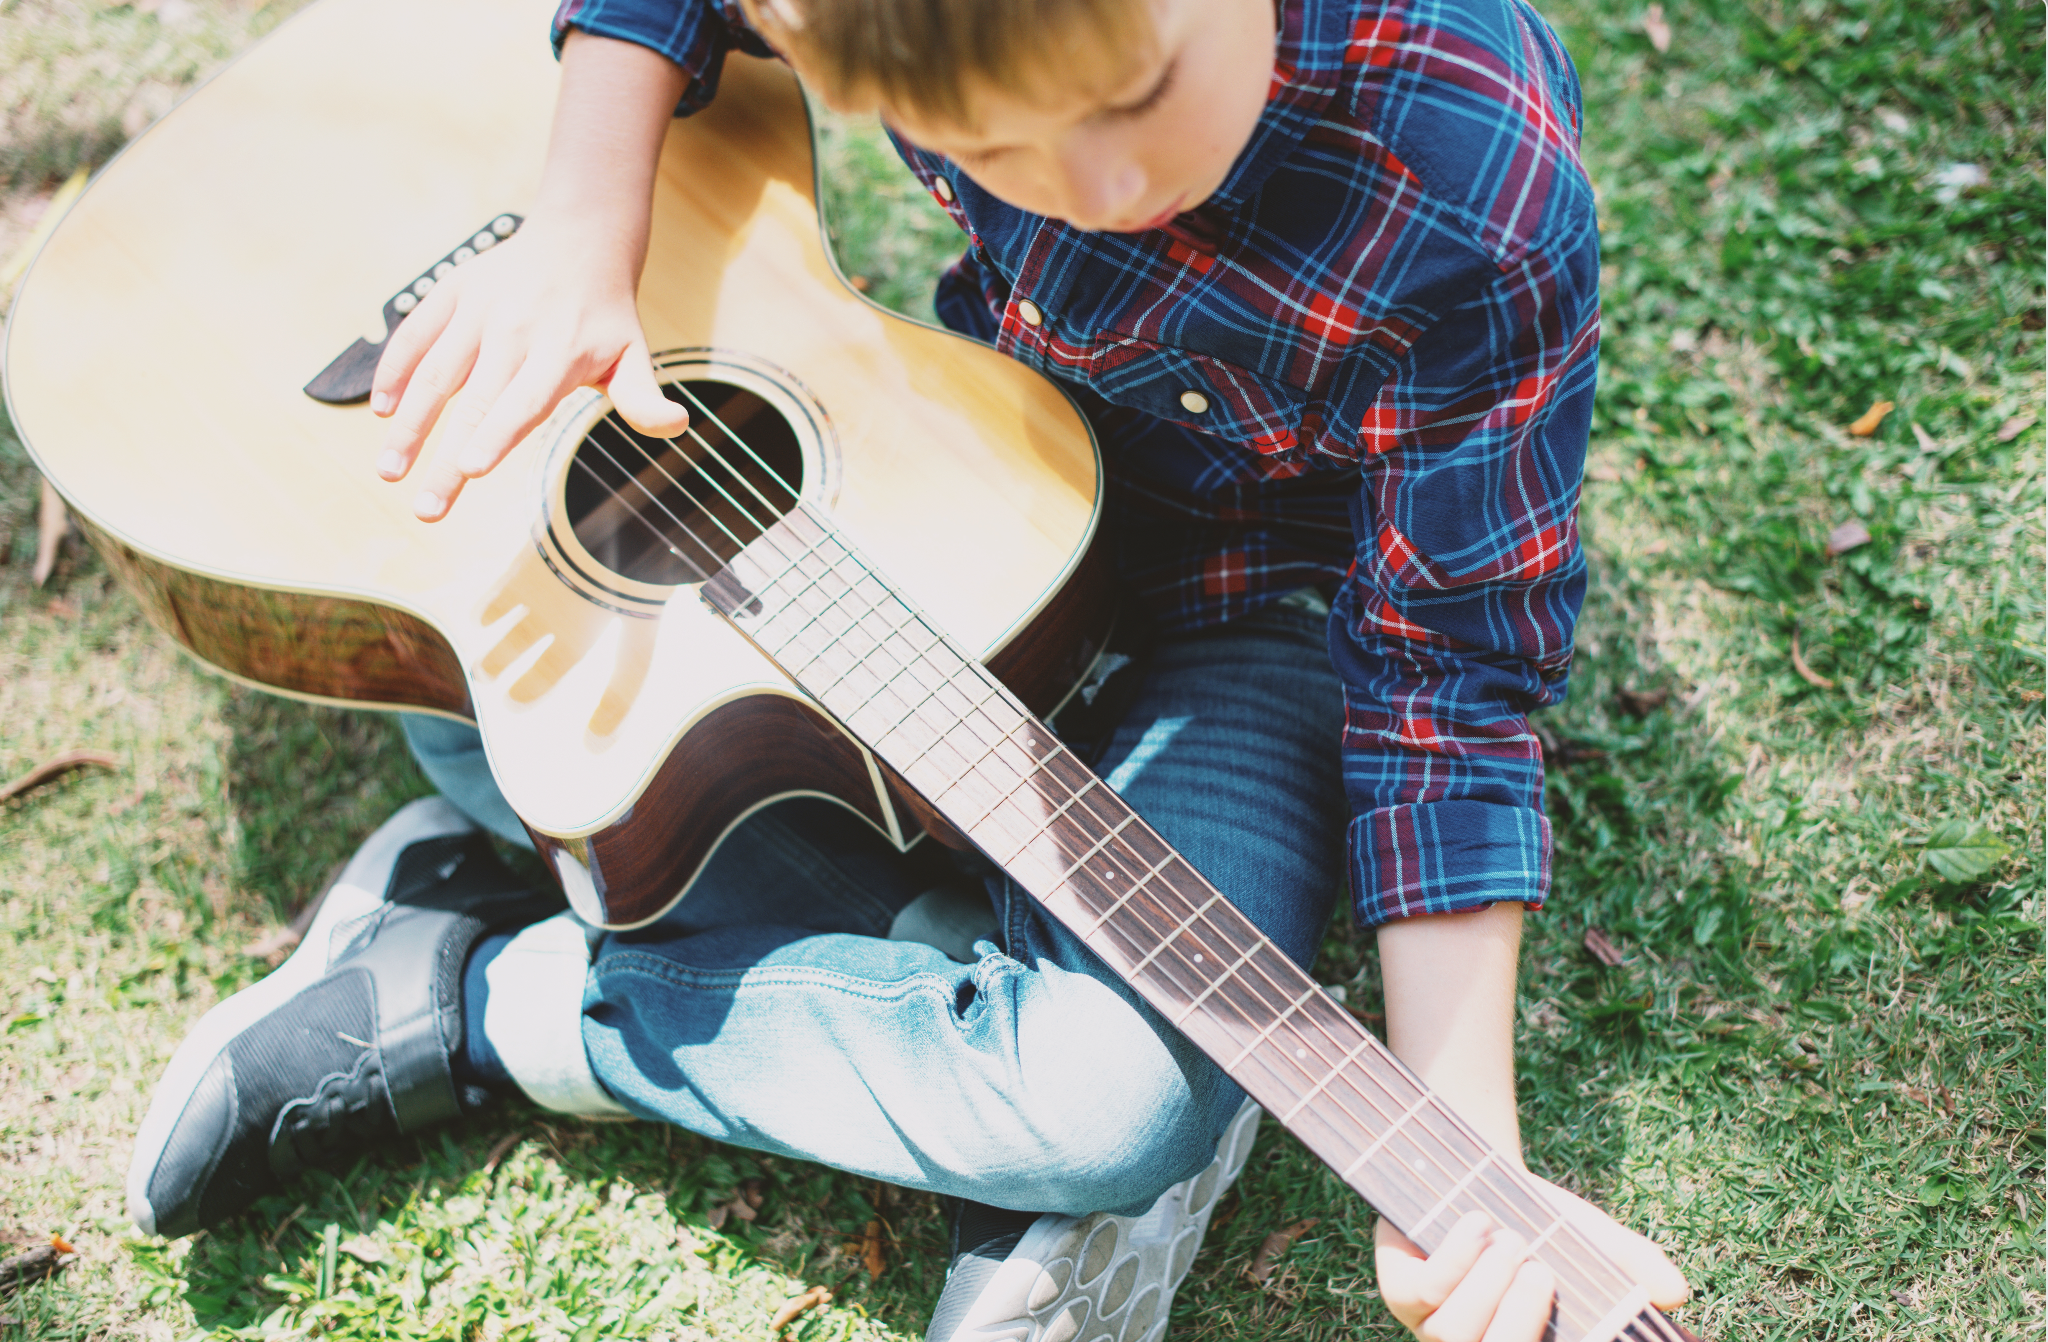 unschooling ideas - boy playing guitar